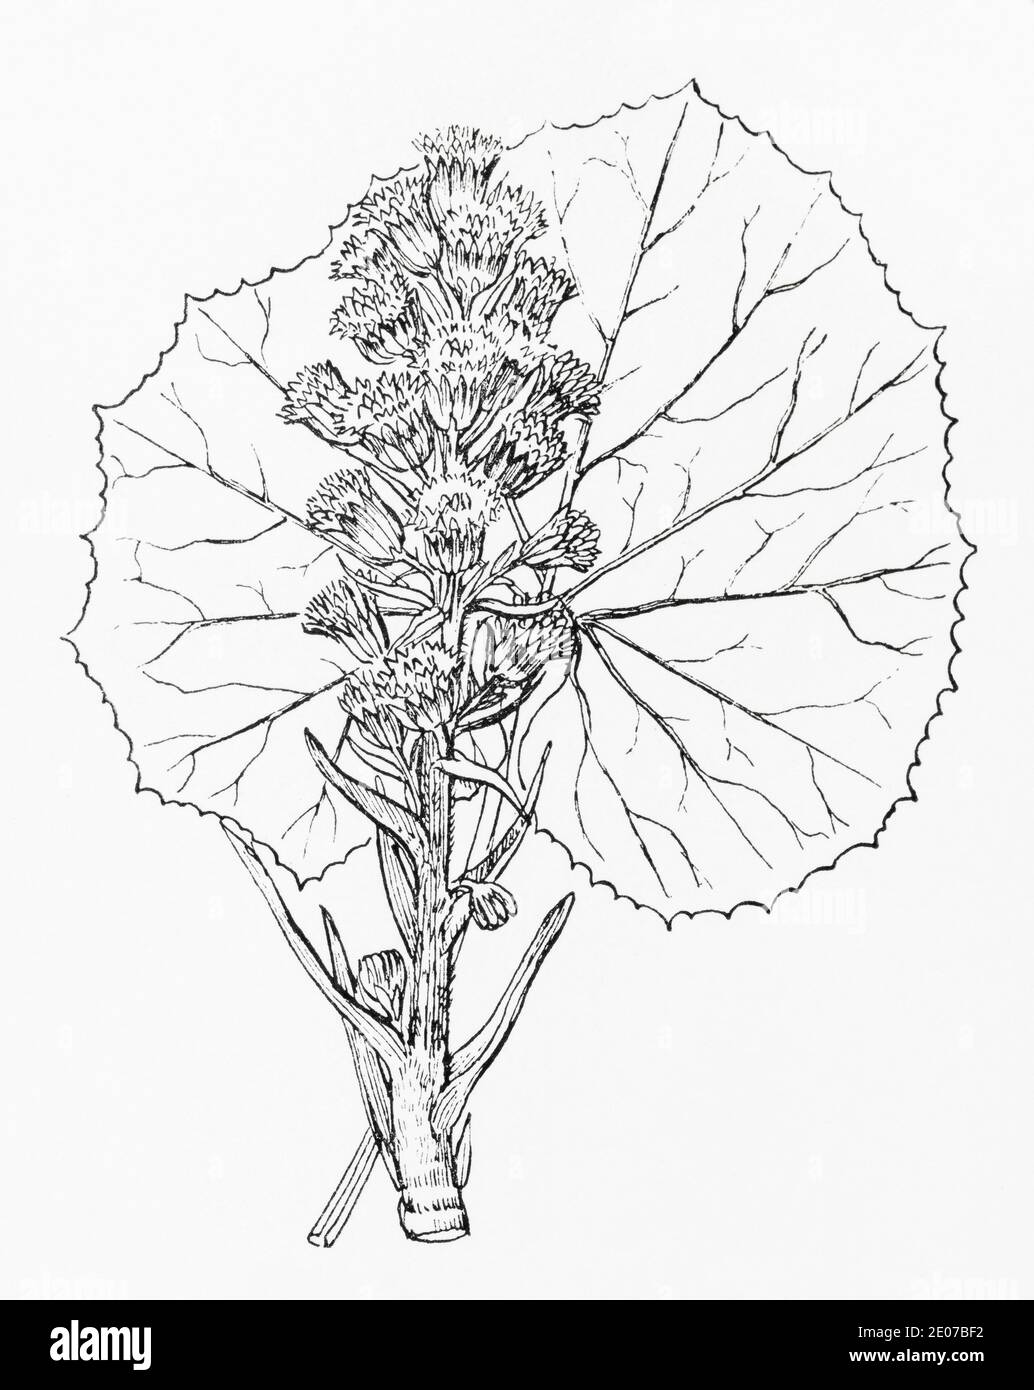 Alte botanische Illustration Gravur von Butterbur / Petasites hybridus, Petasites vulgaris. Traditionelle Heilkräuter Pflanze. Siehe Hinweise Stockfoto